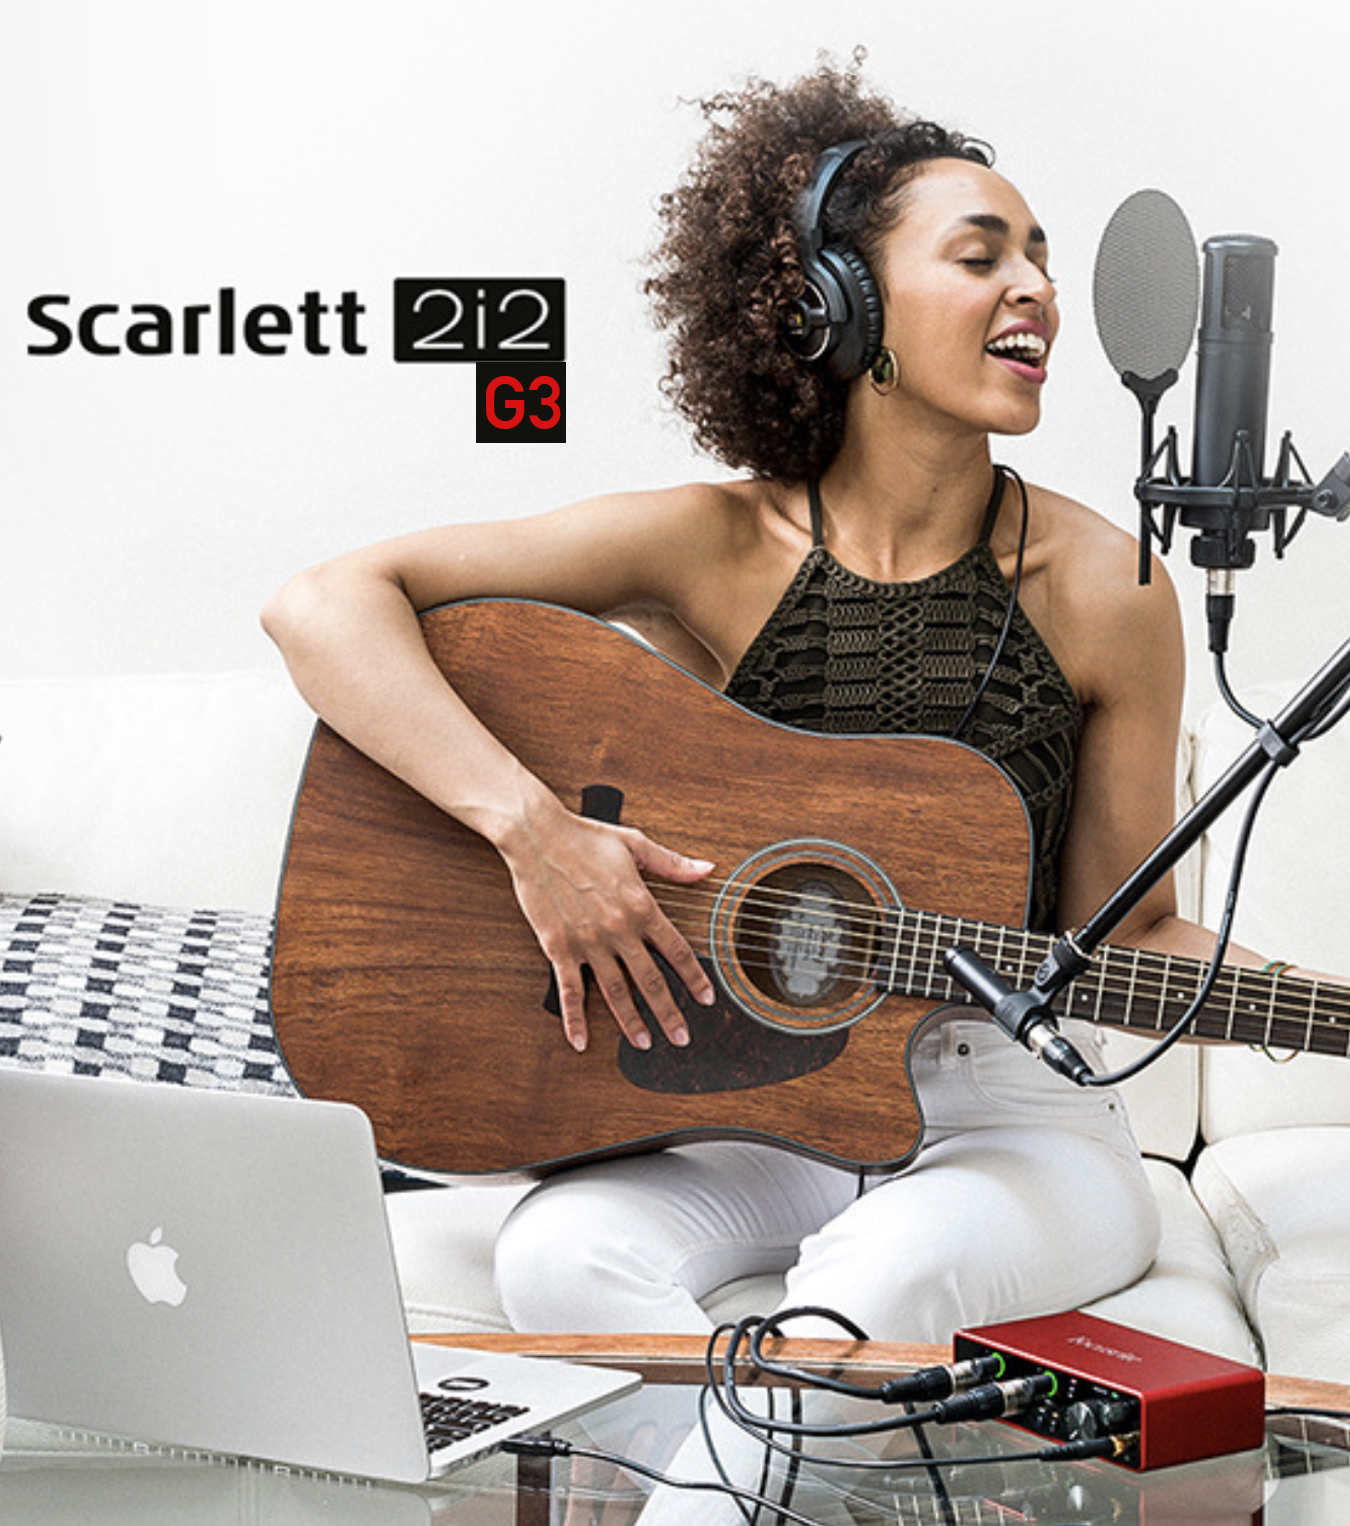 Soundcard Focusrite Scarlett 2i2 3rd (Gen) - Giao diện thu âm studio 2 Mic